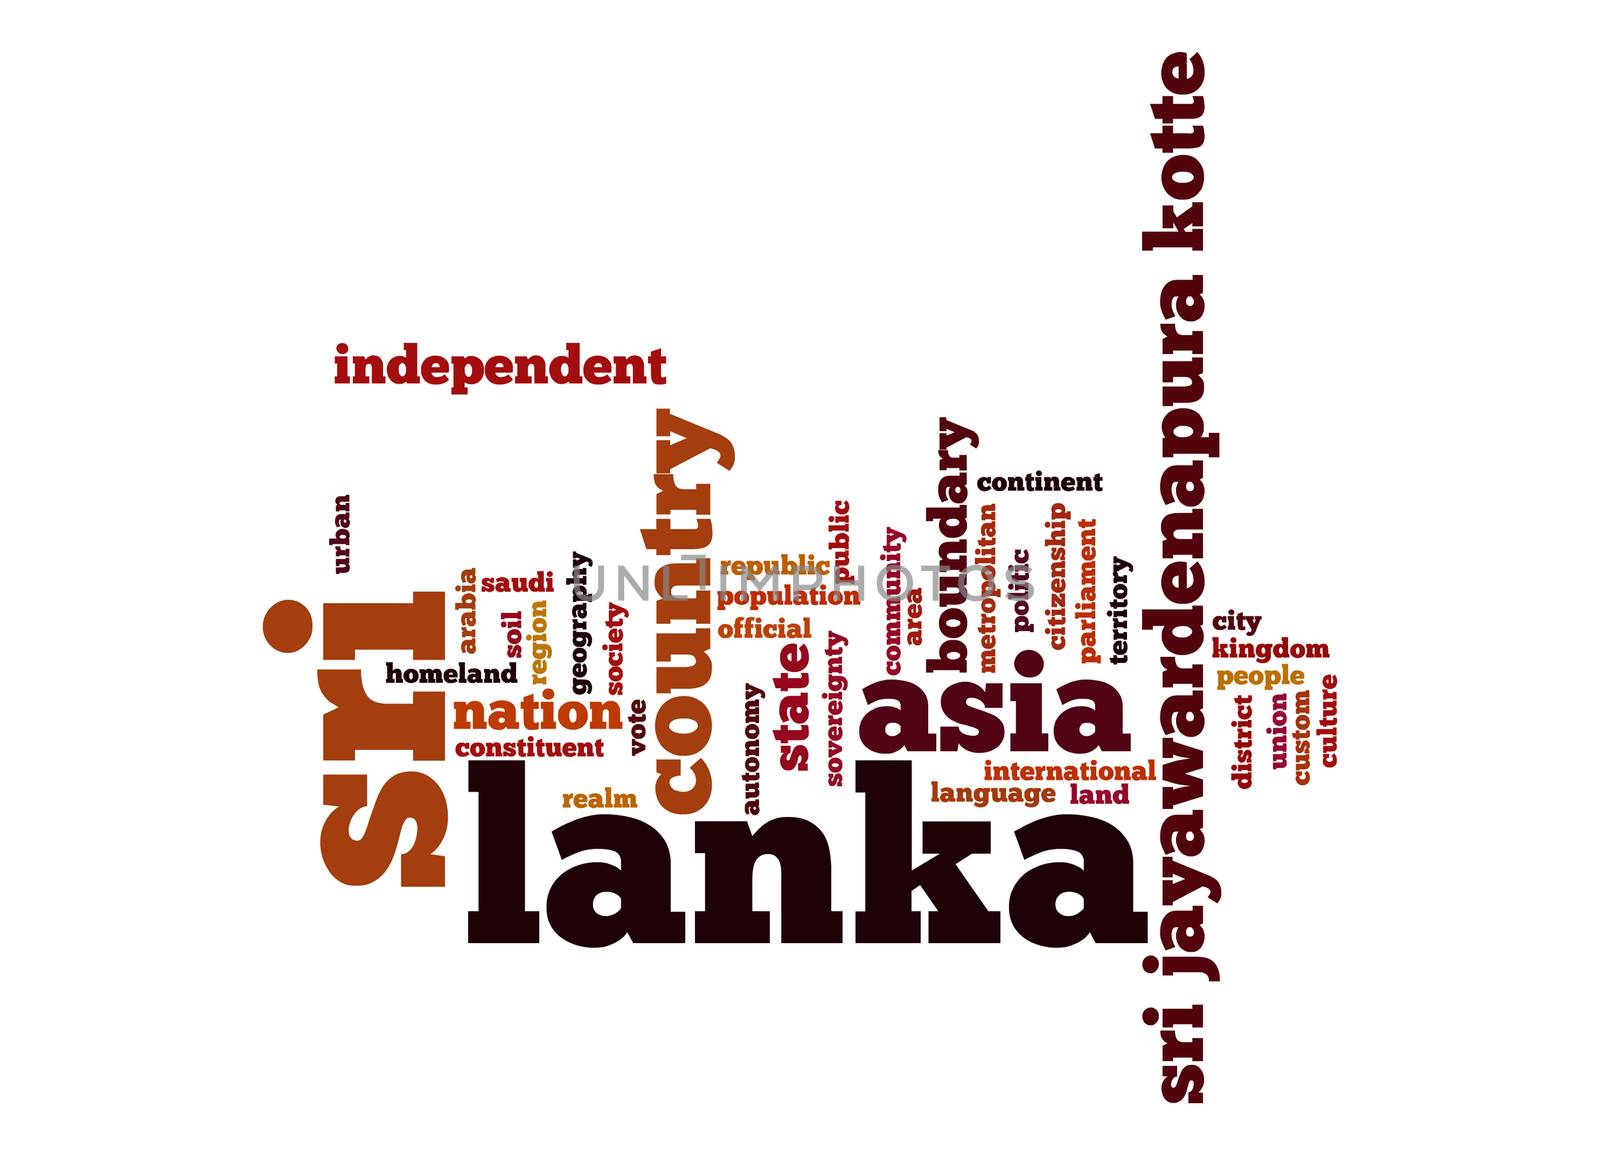 Sri Lanka word cloud